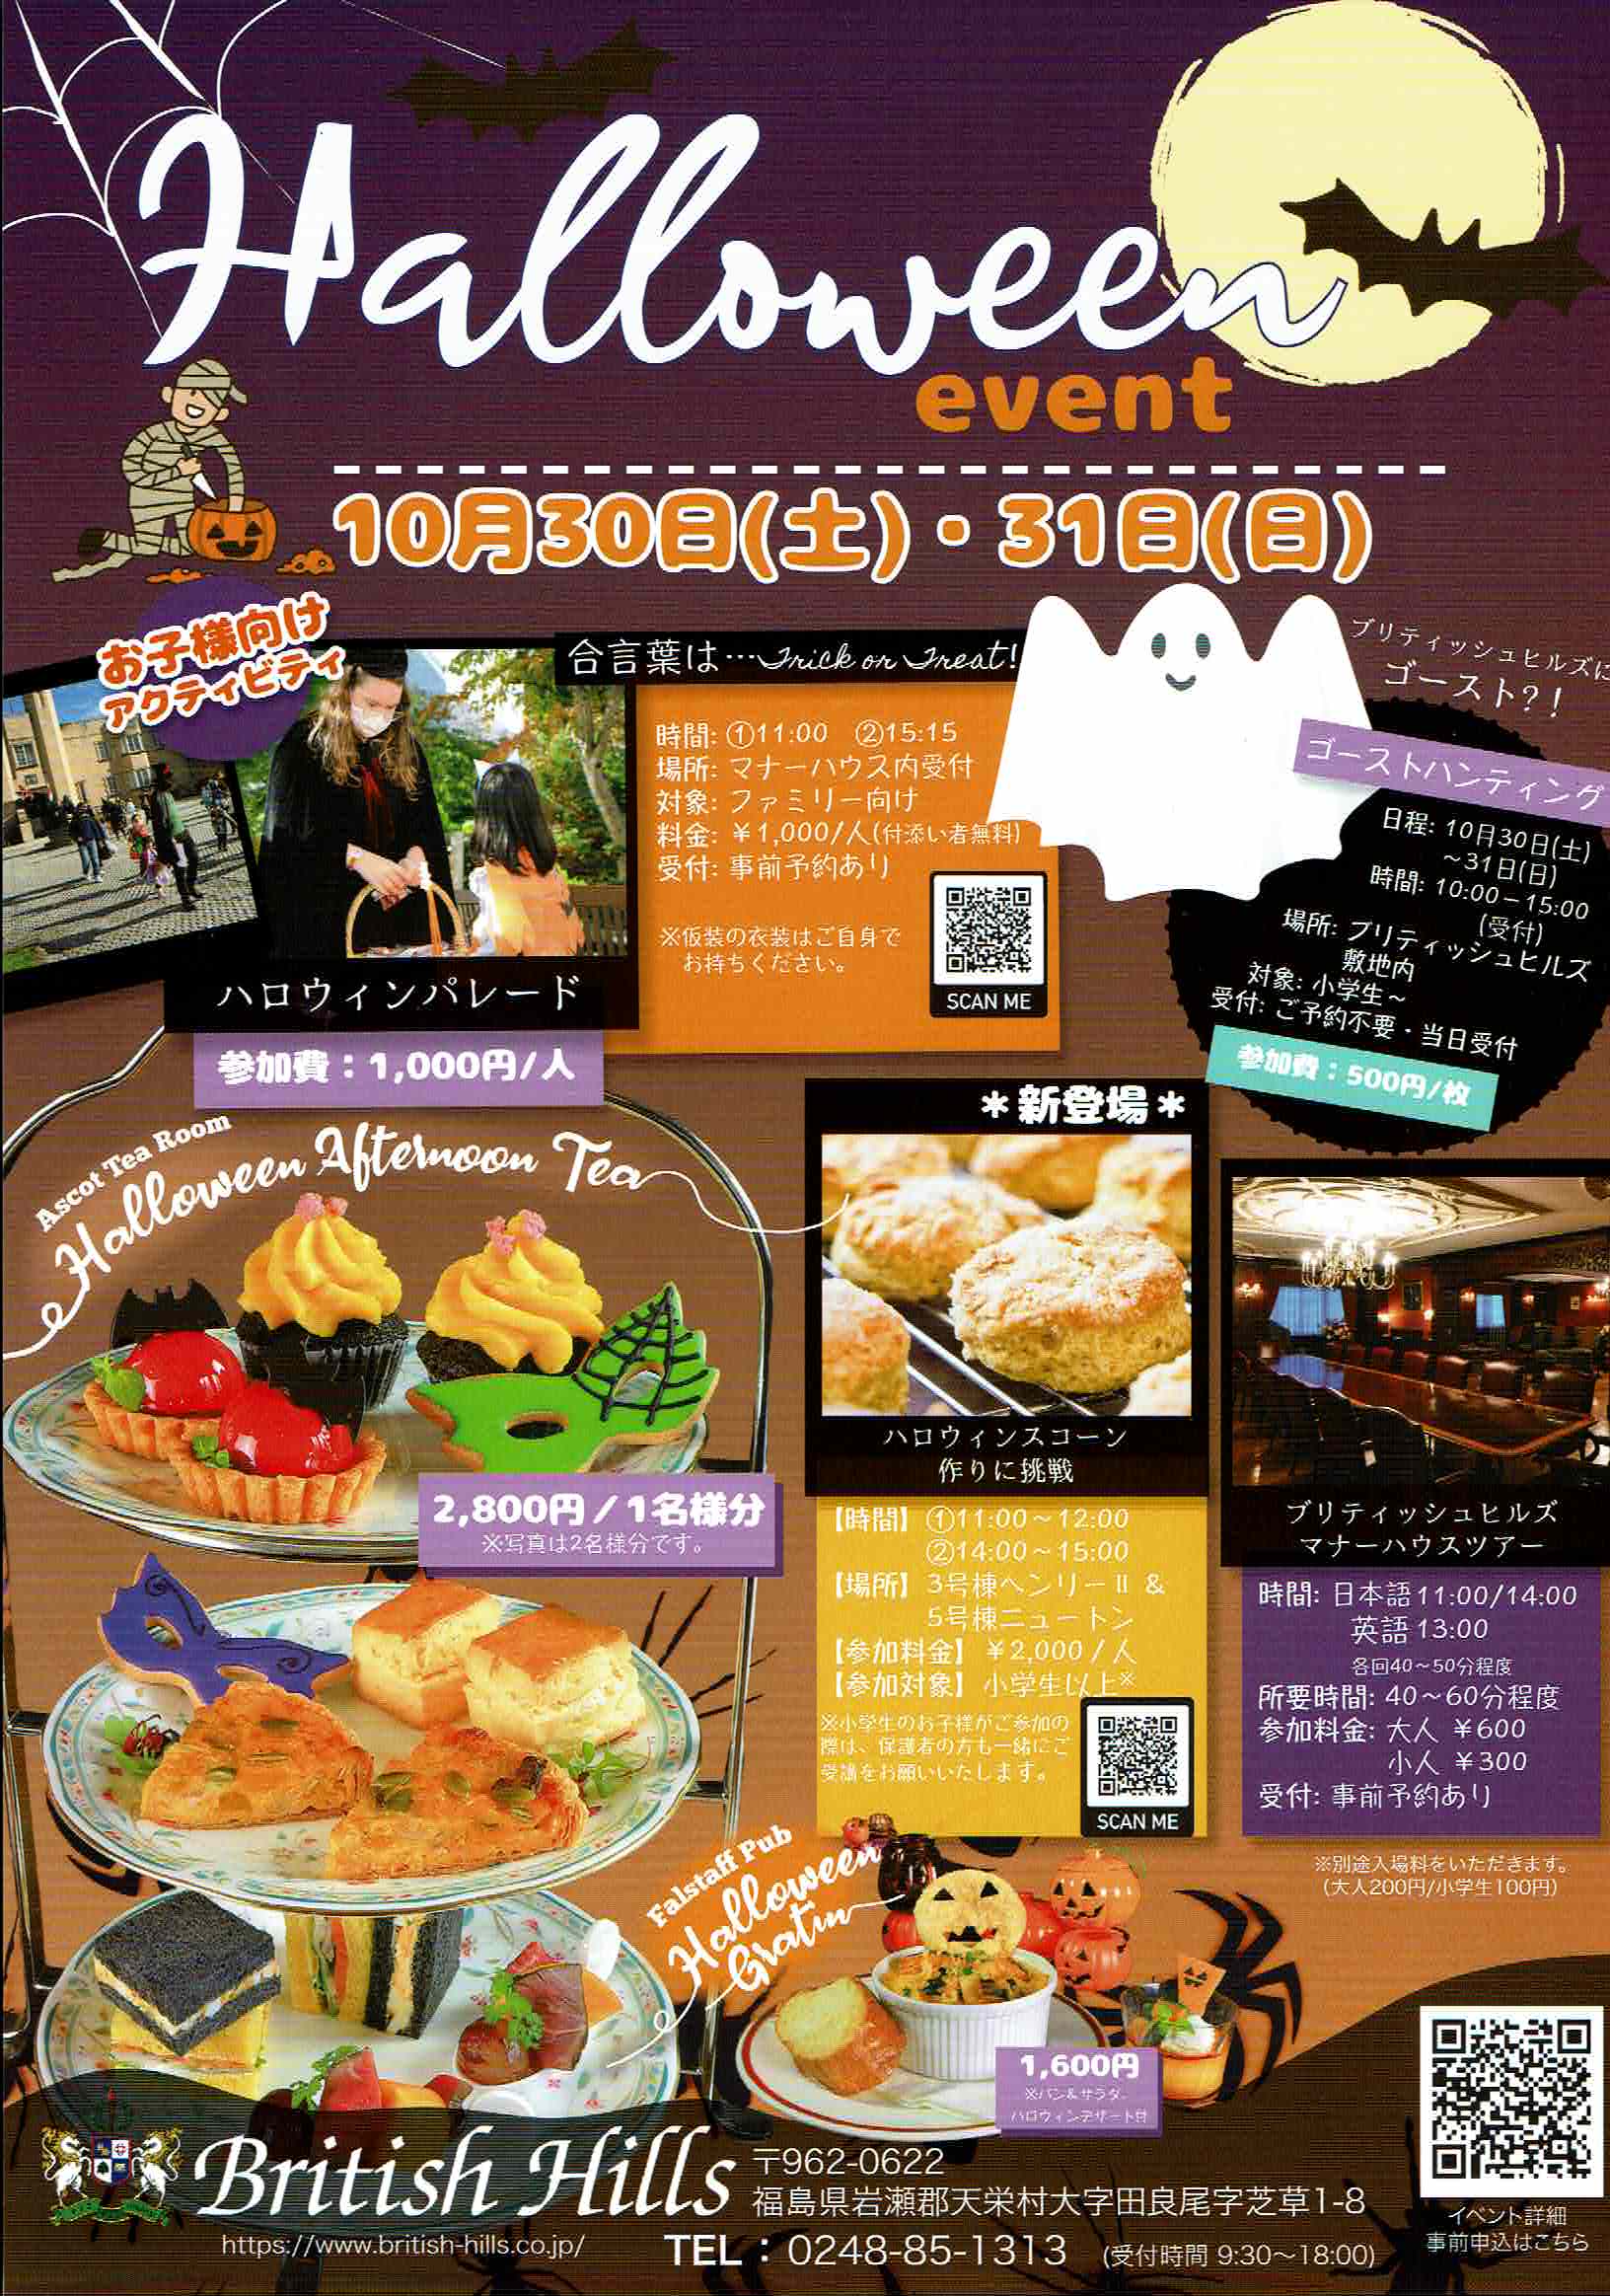 Halloween event in British Hills◆10月30日(土)・31日(日)